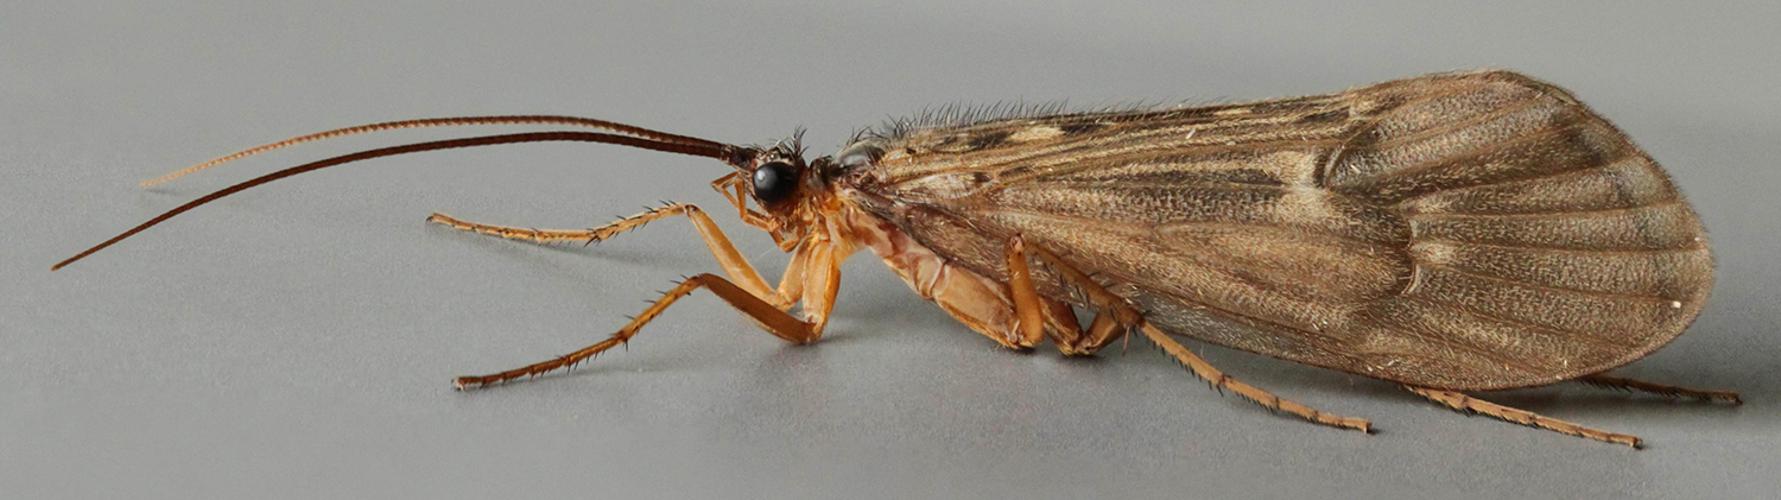 Potamophylax latipennis, Limnephilidae, Trawscoed, North Wales, August 2012 (1) (18039851441).jpg © Janet Graham